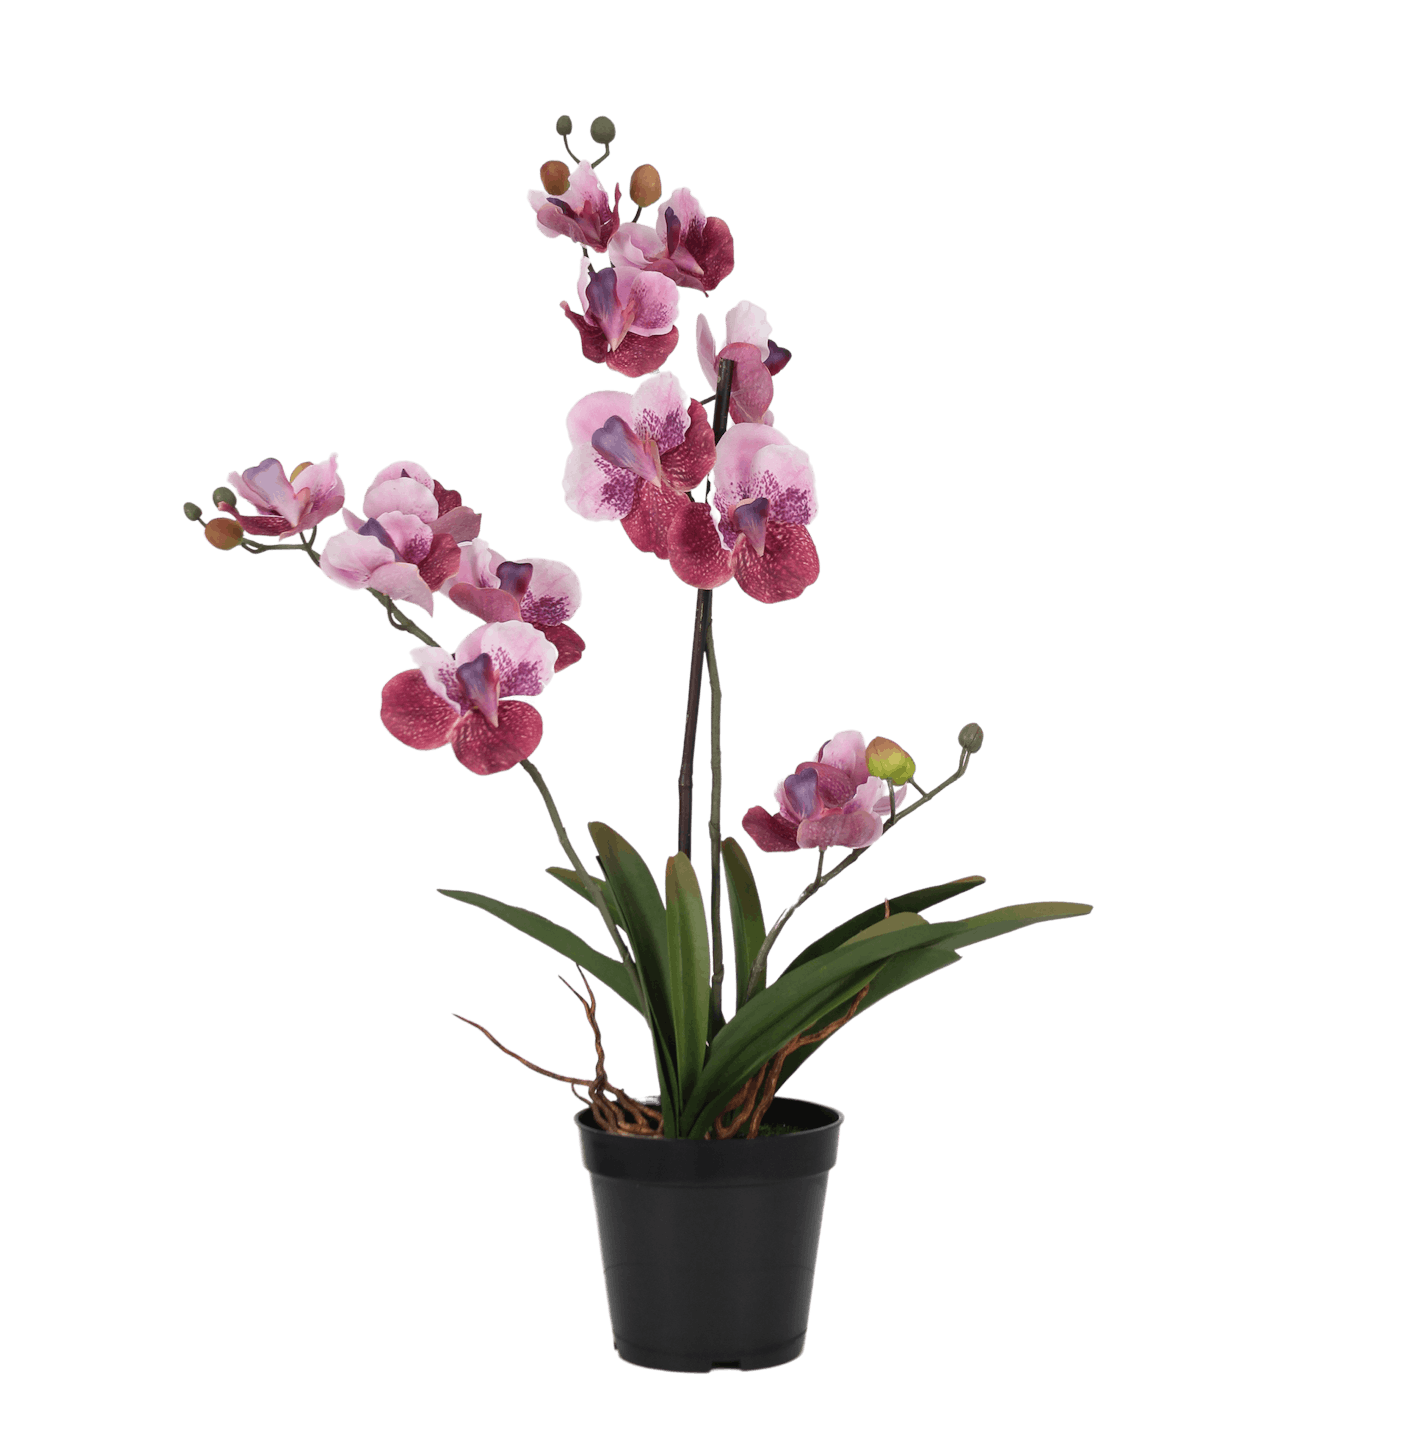 Faux pink vanda orchid flower